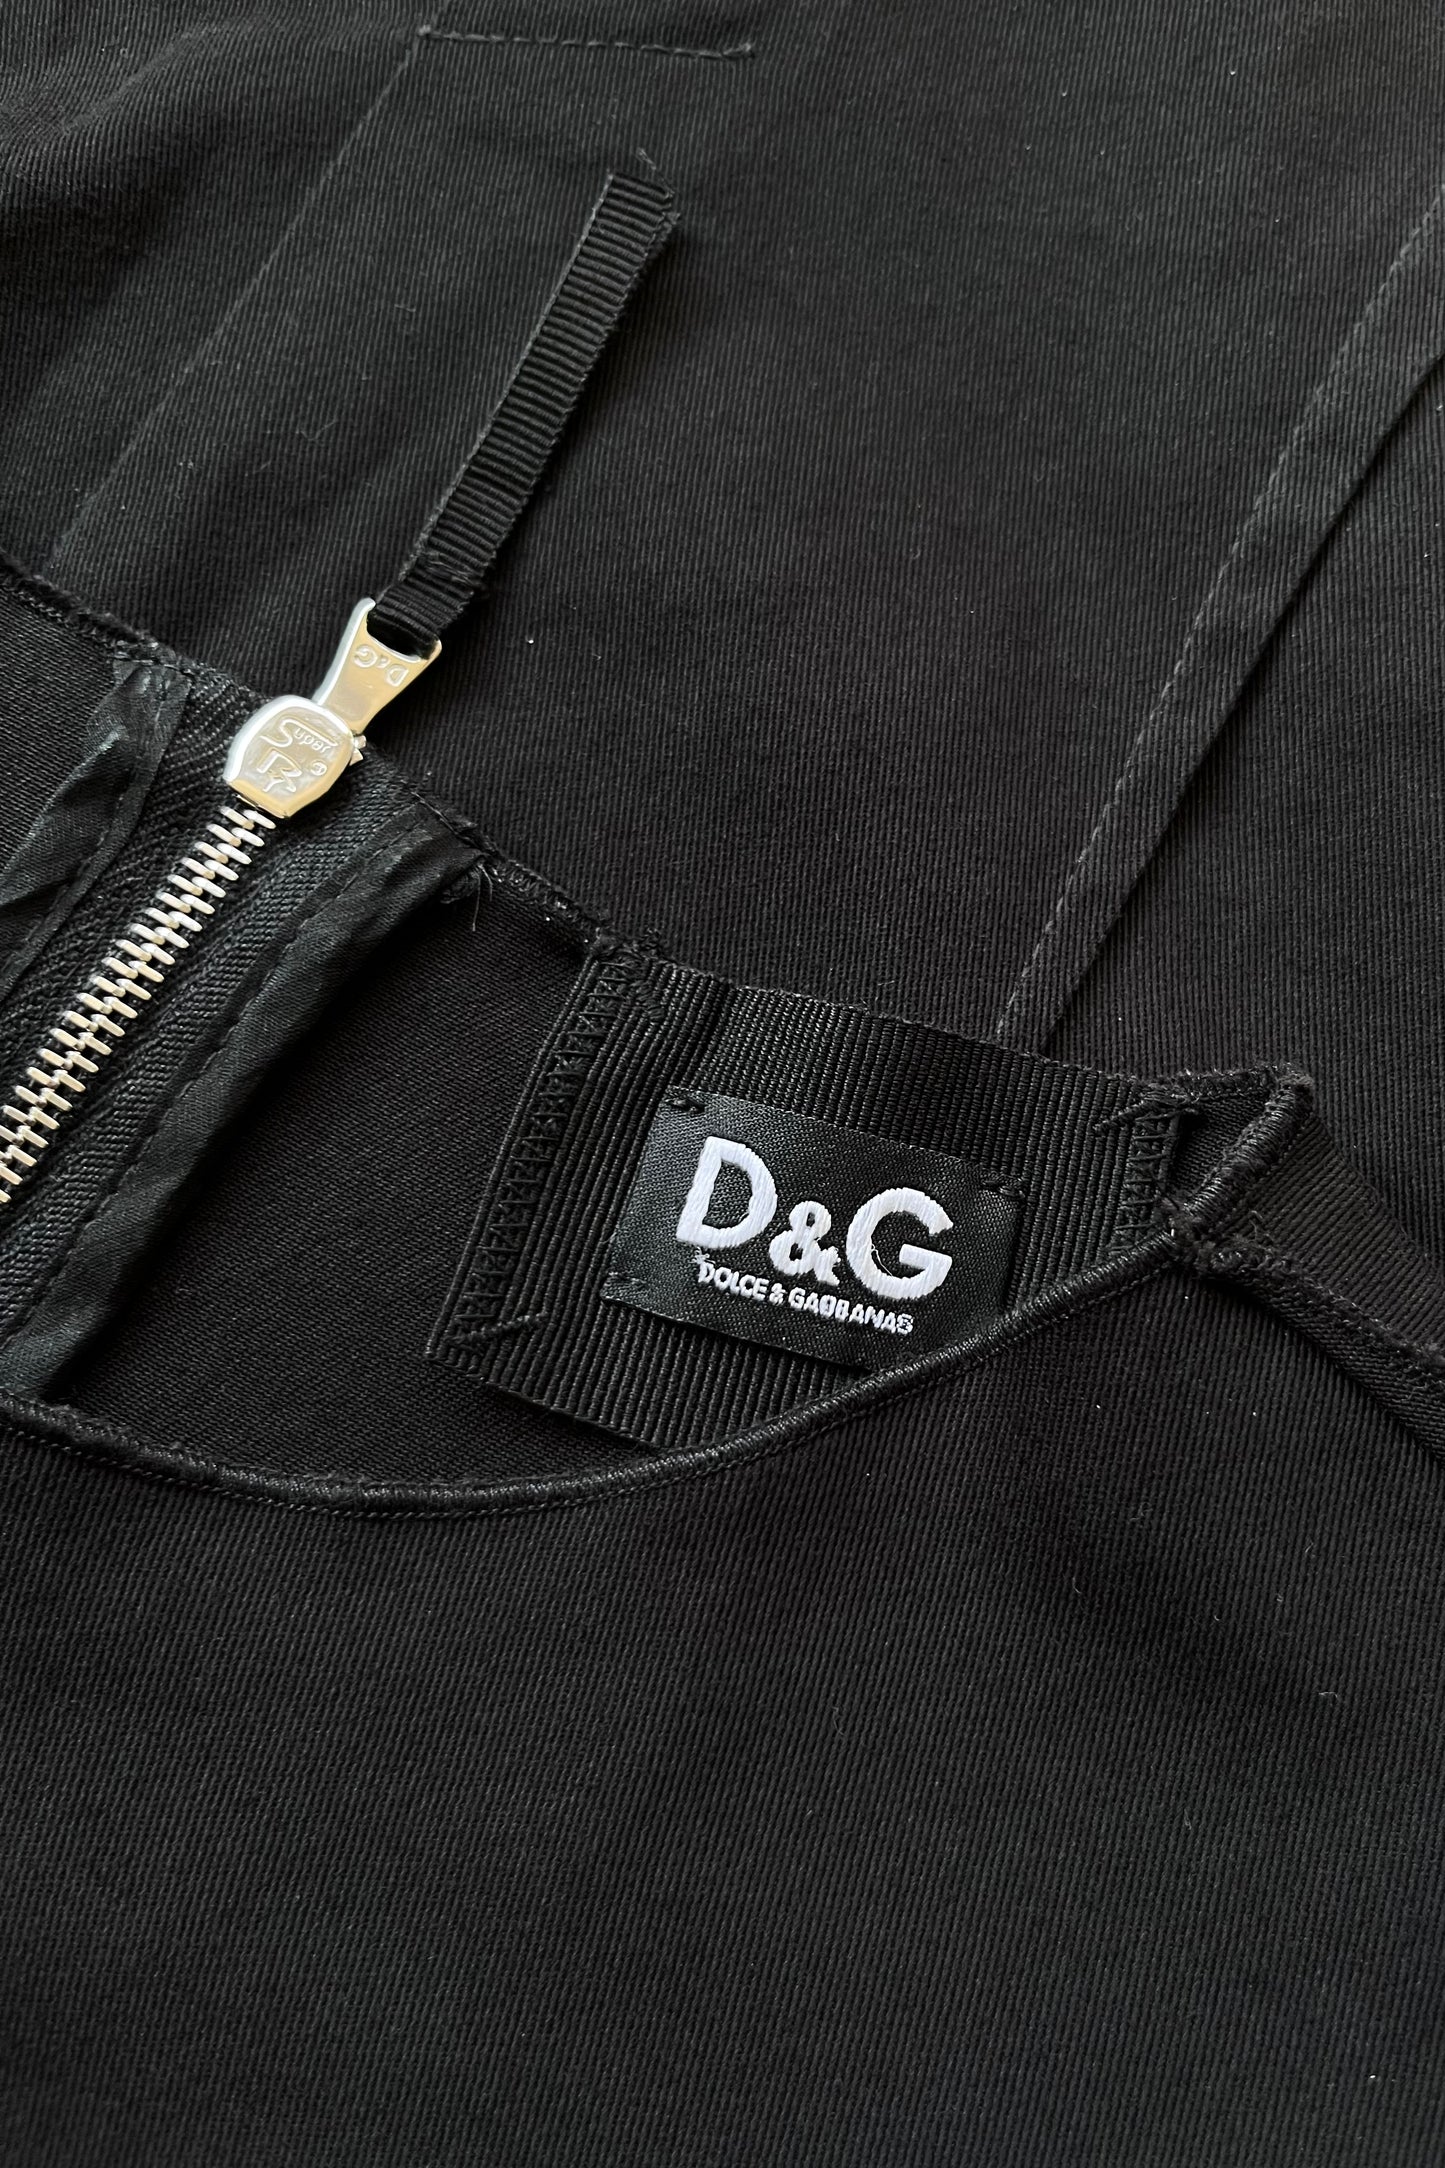 D&G Evning Dress